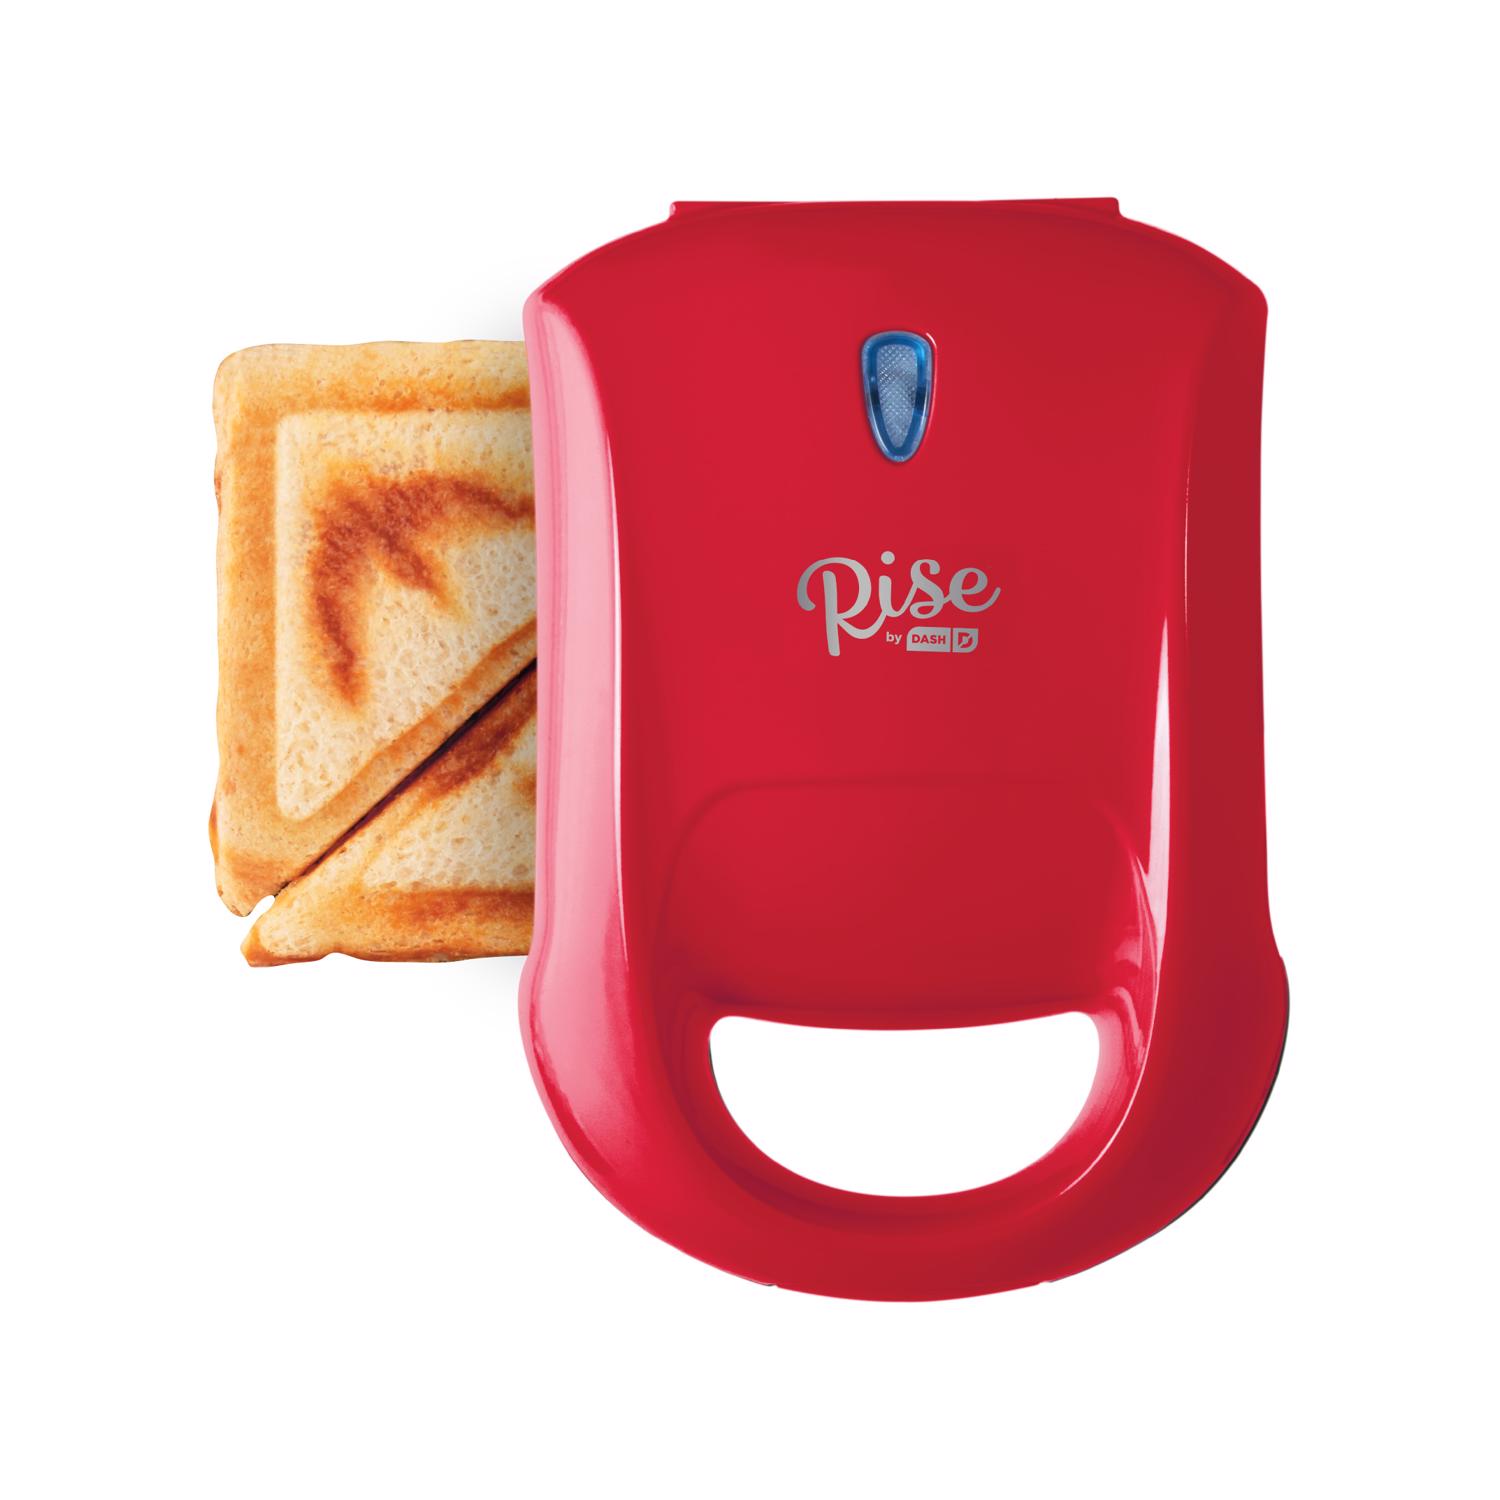 Dash Express Pocket Sandwich Maker - Red